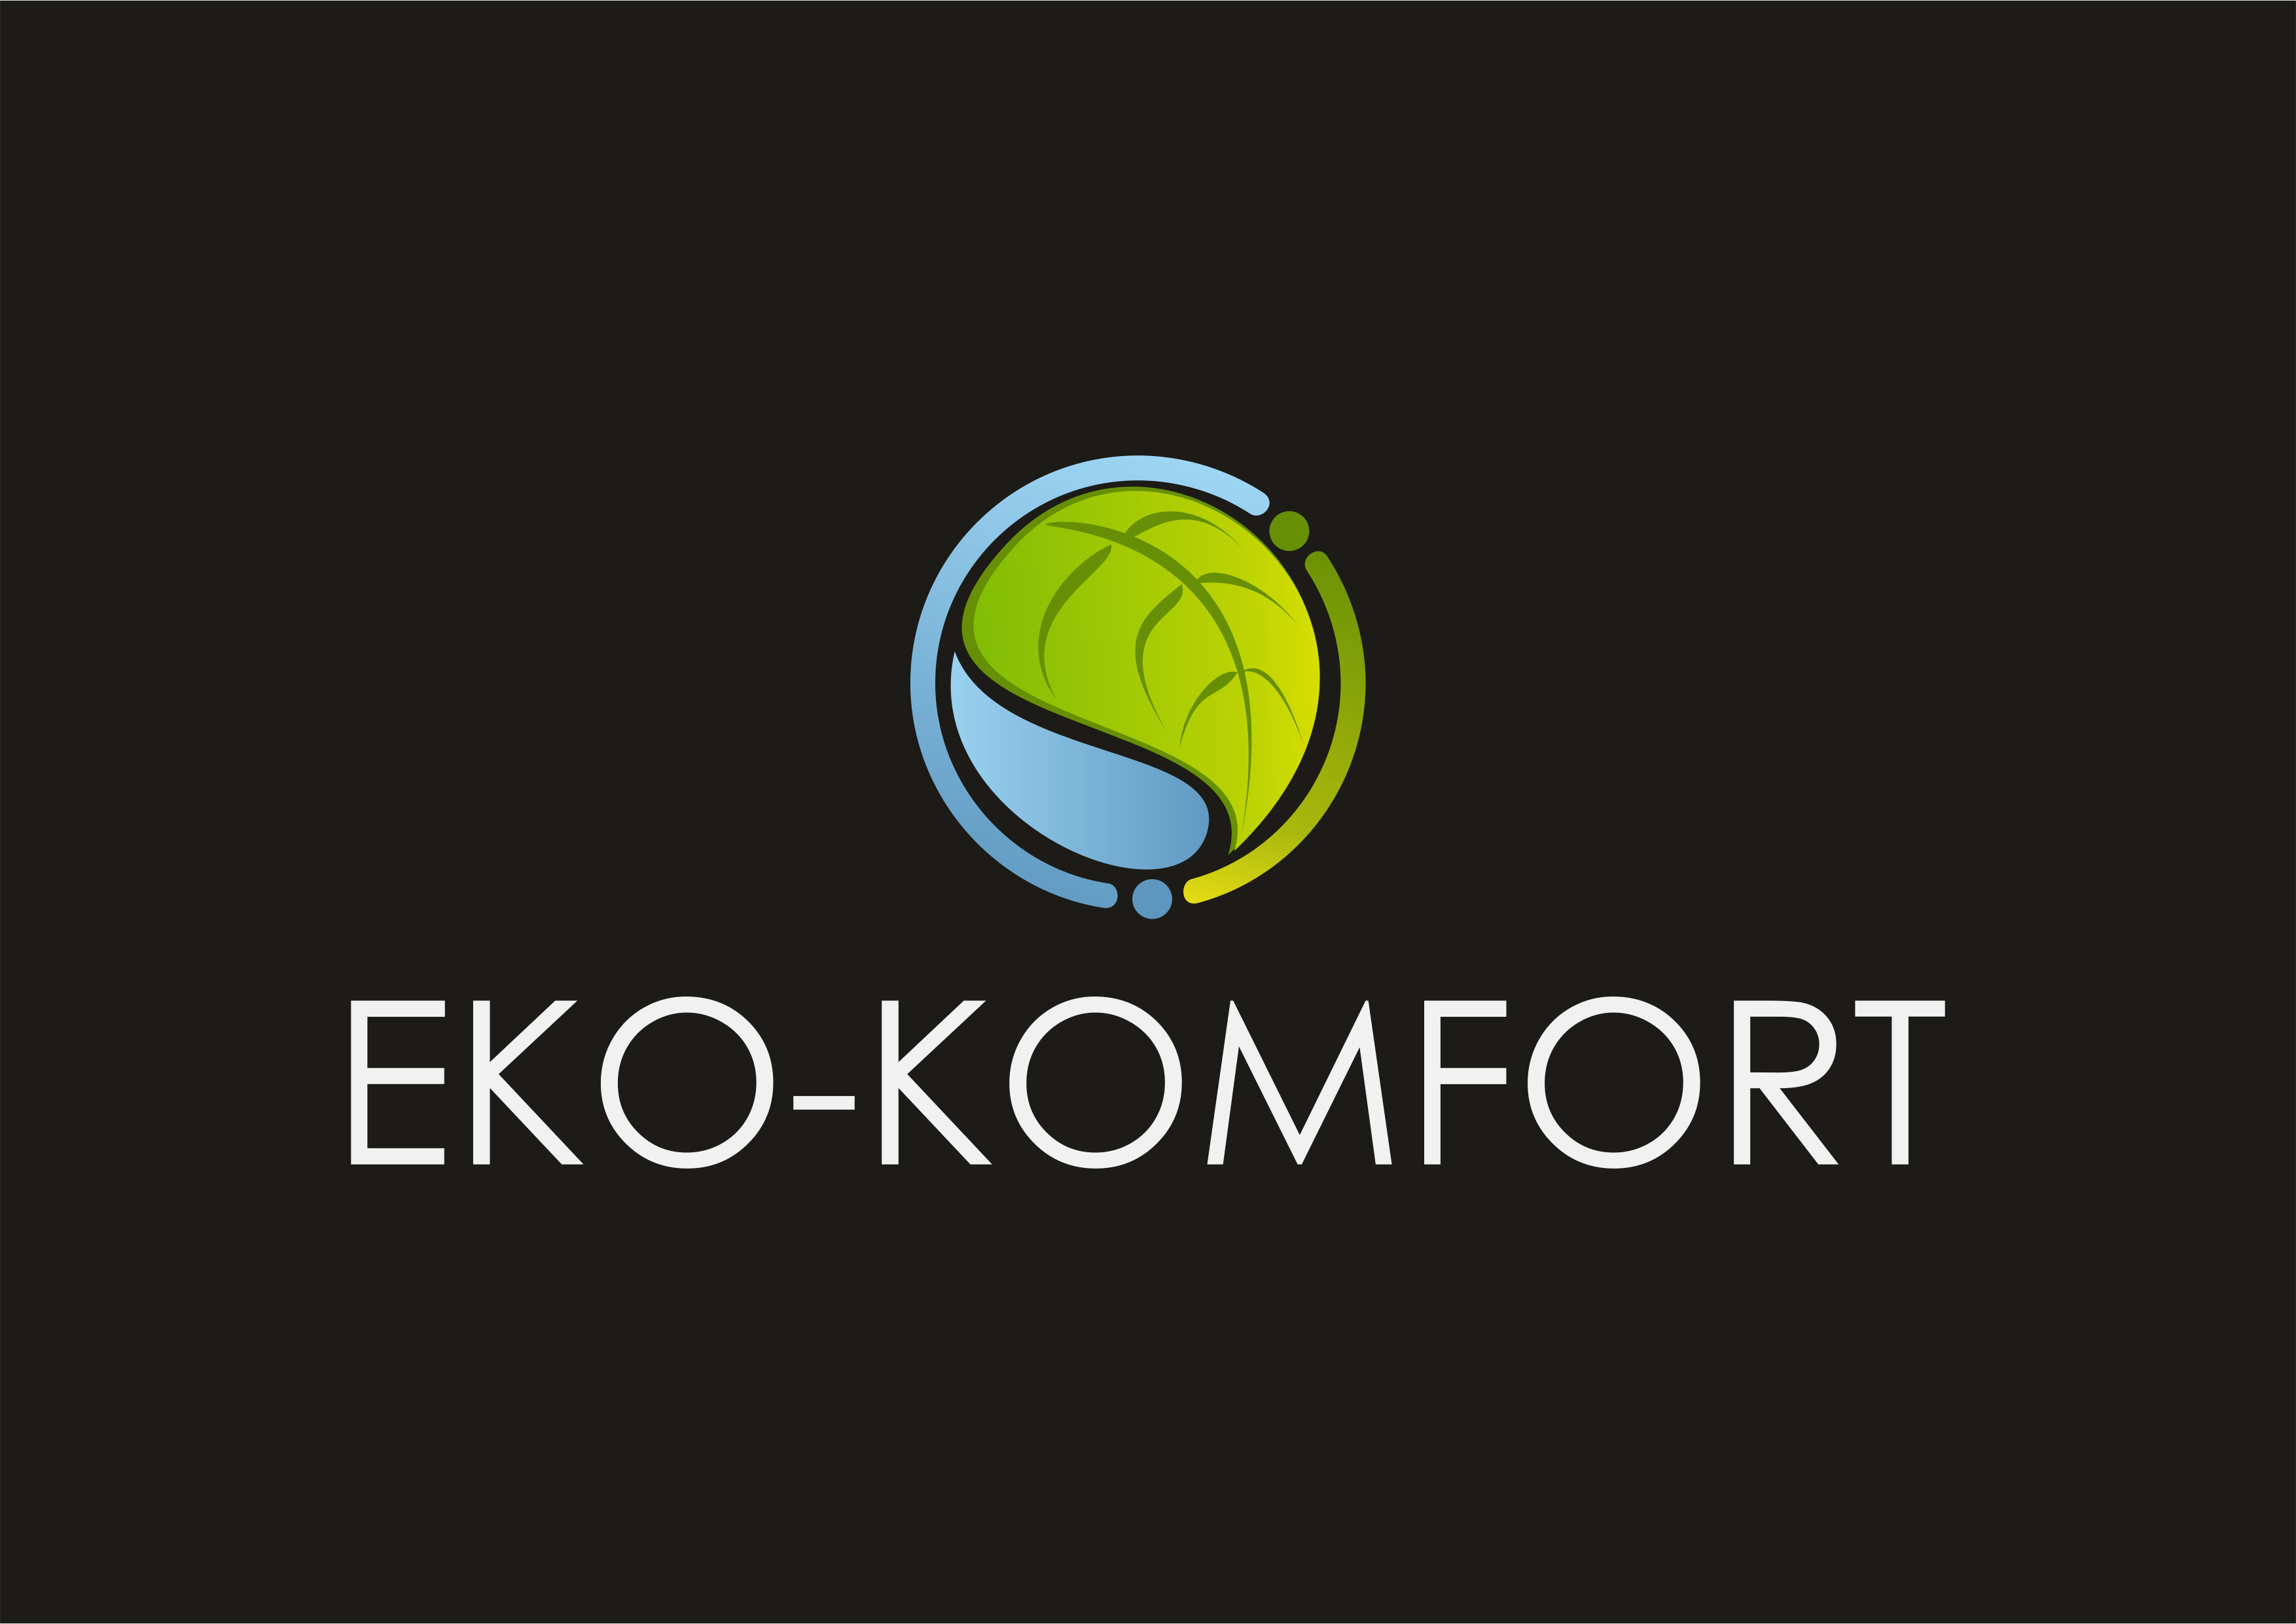 Eko-komfort